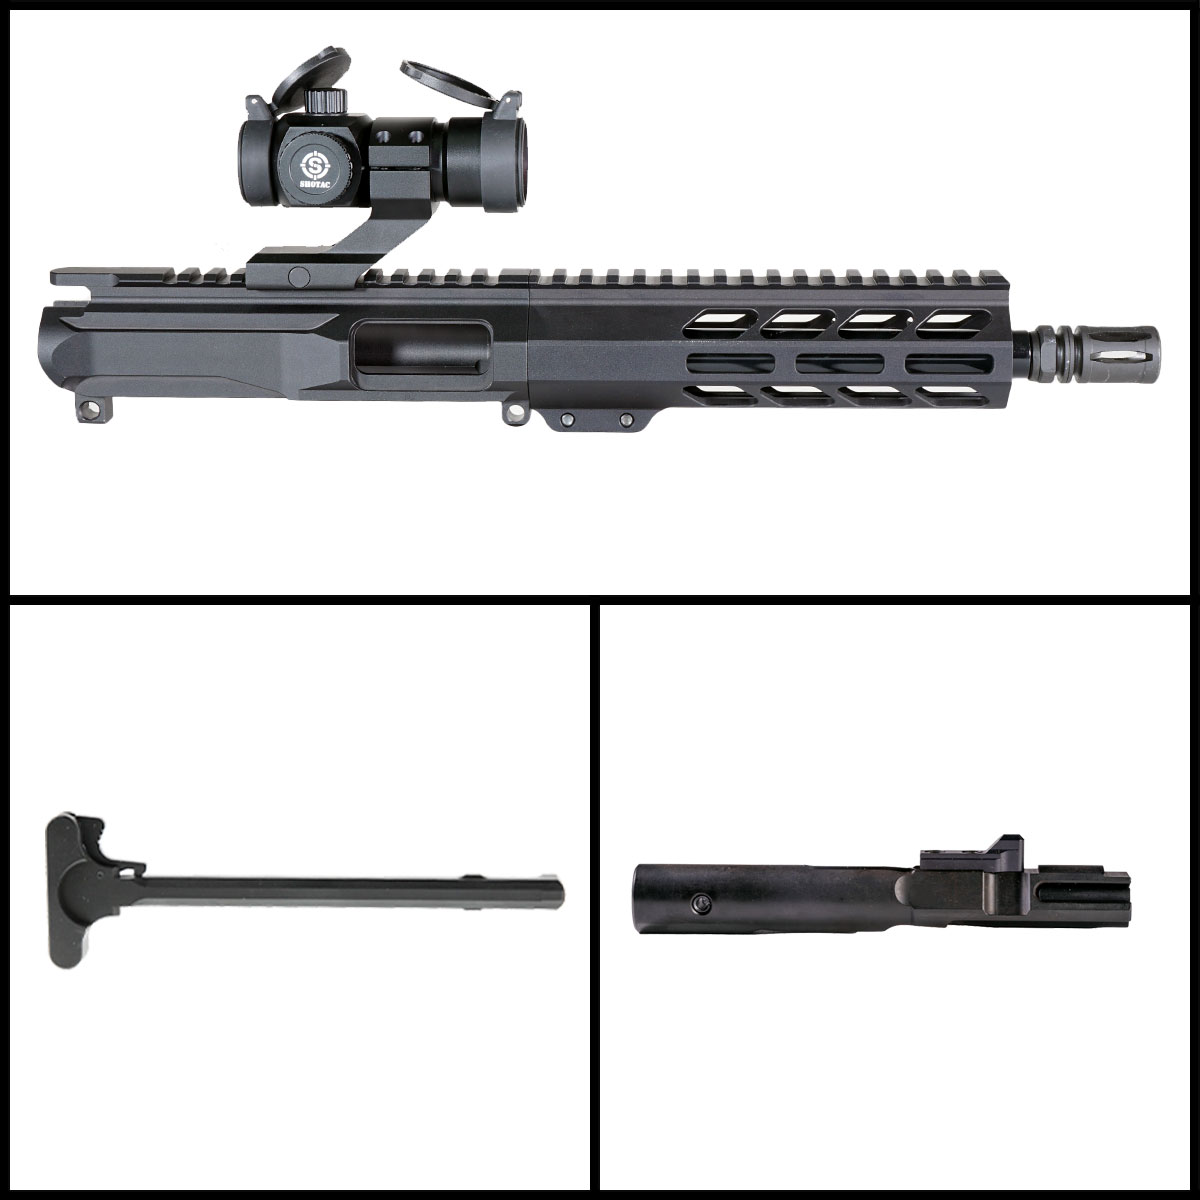 OTD 'Eternal Night Gen 2 w/ Shotac Cantilever' 8.5-inch AR-15 9mm Nitride Pistol Complete Upper Build Kit